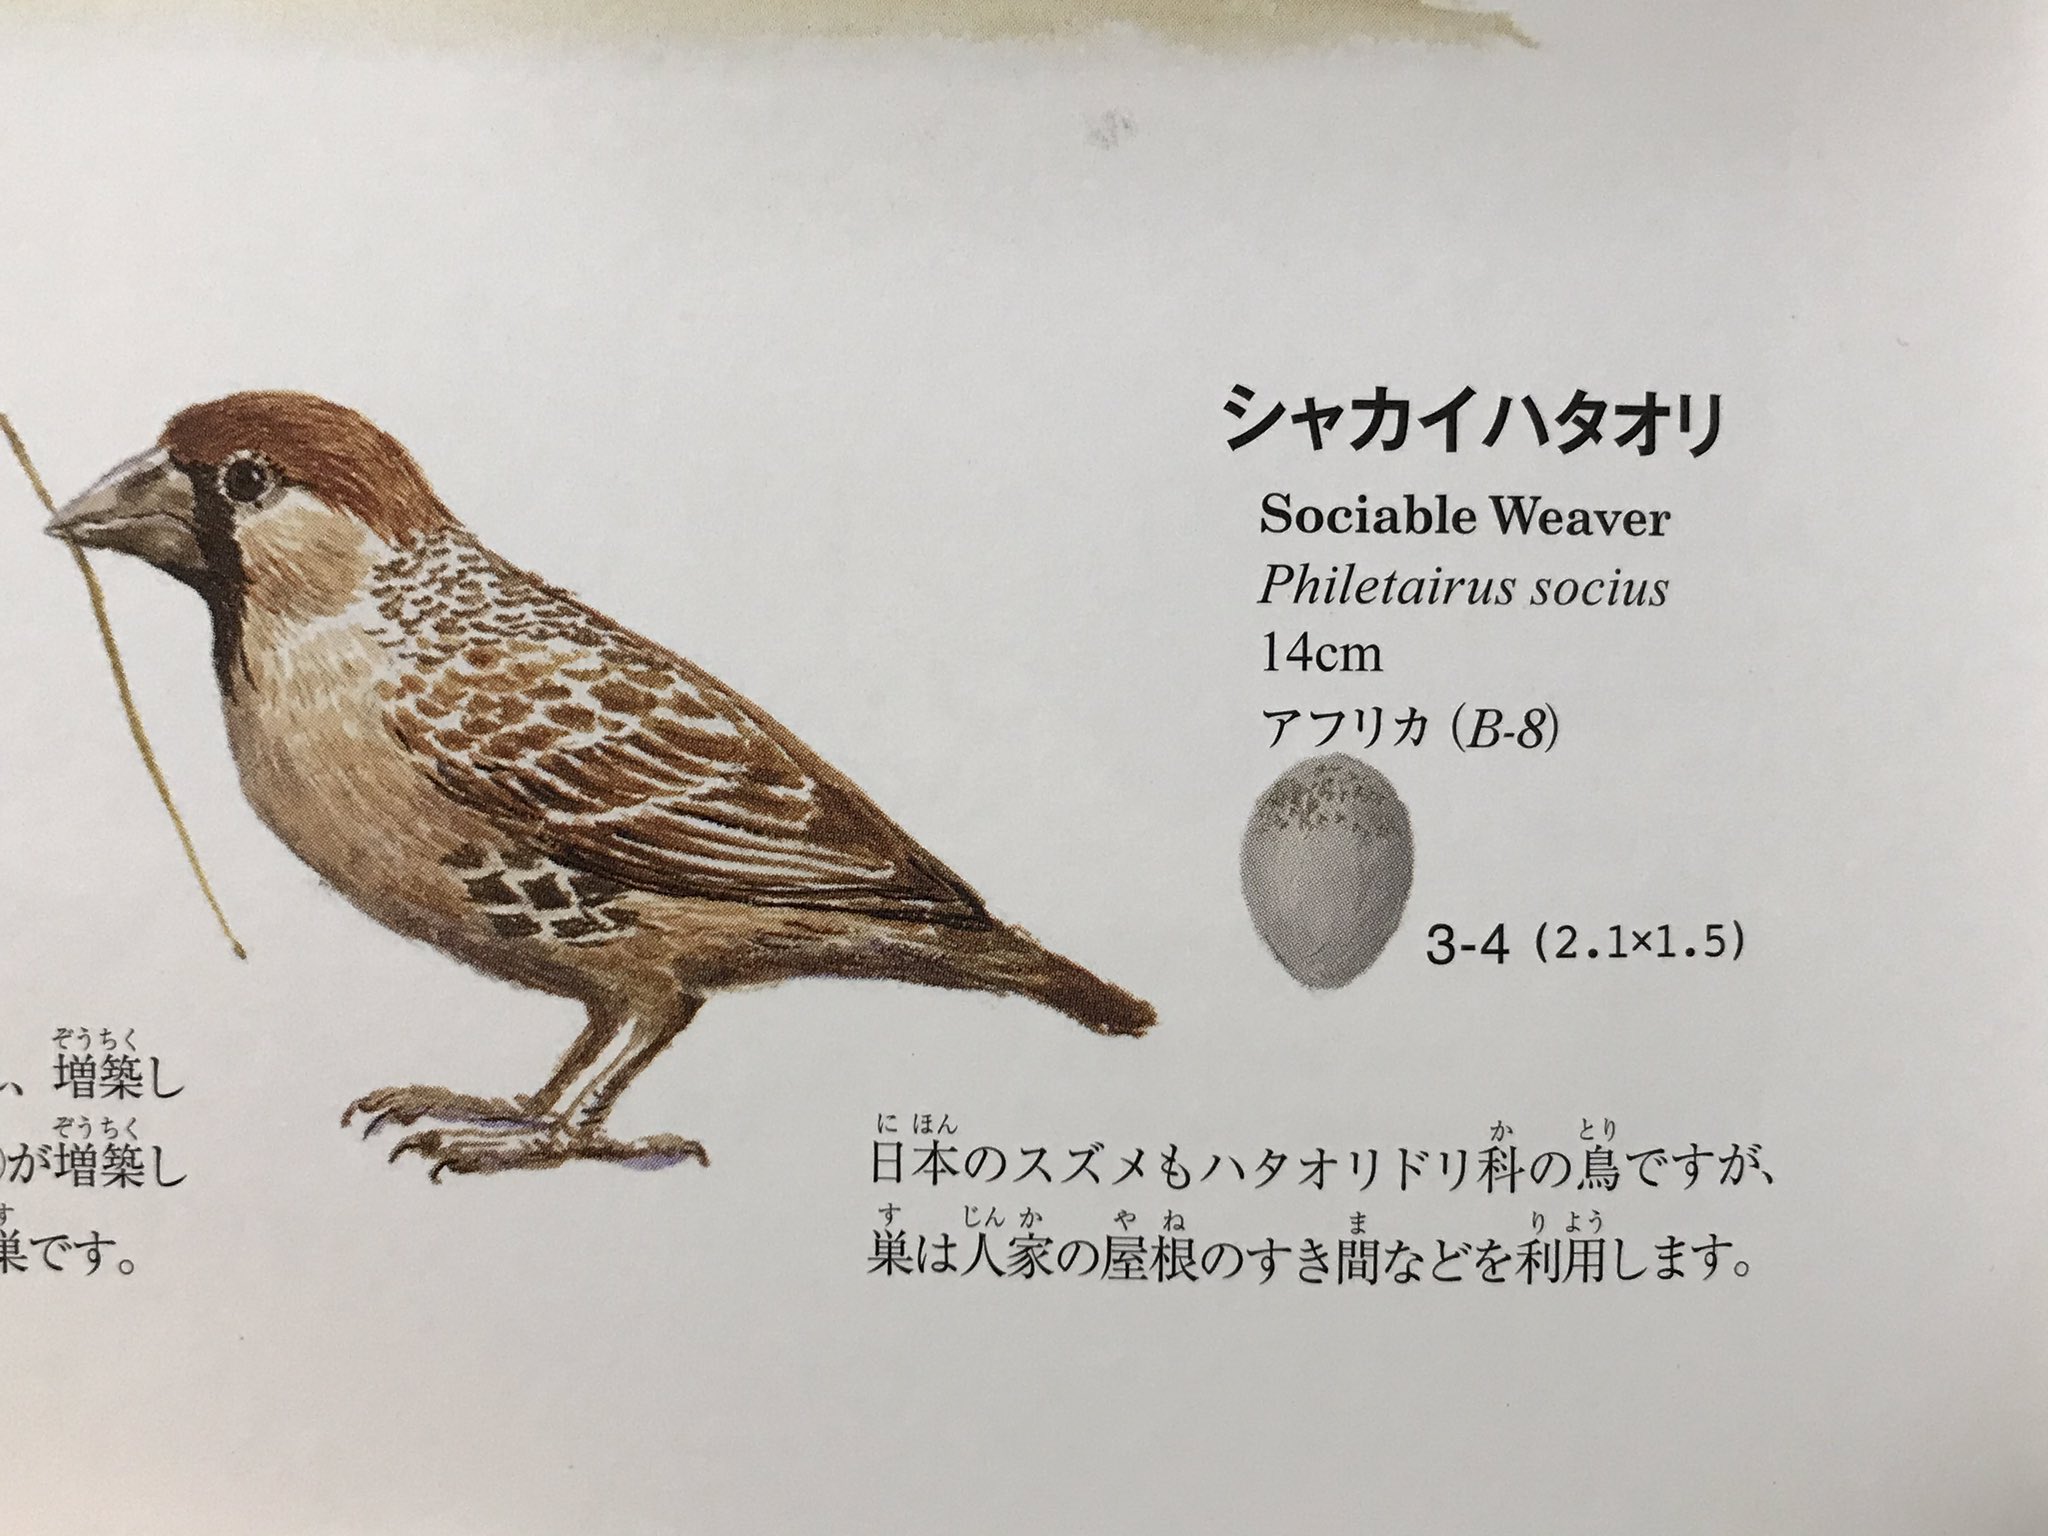 Tetsuya Igarashi على تويتر シャカイハタオリ Sociable Weaver 社会的な機織り職人 直訳 どうも仕事仲間のような気がしてきた 世界の鳥の巣の本 鈴木まもる著 岩崎書店 これは良い本だ ハタオリ